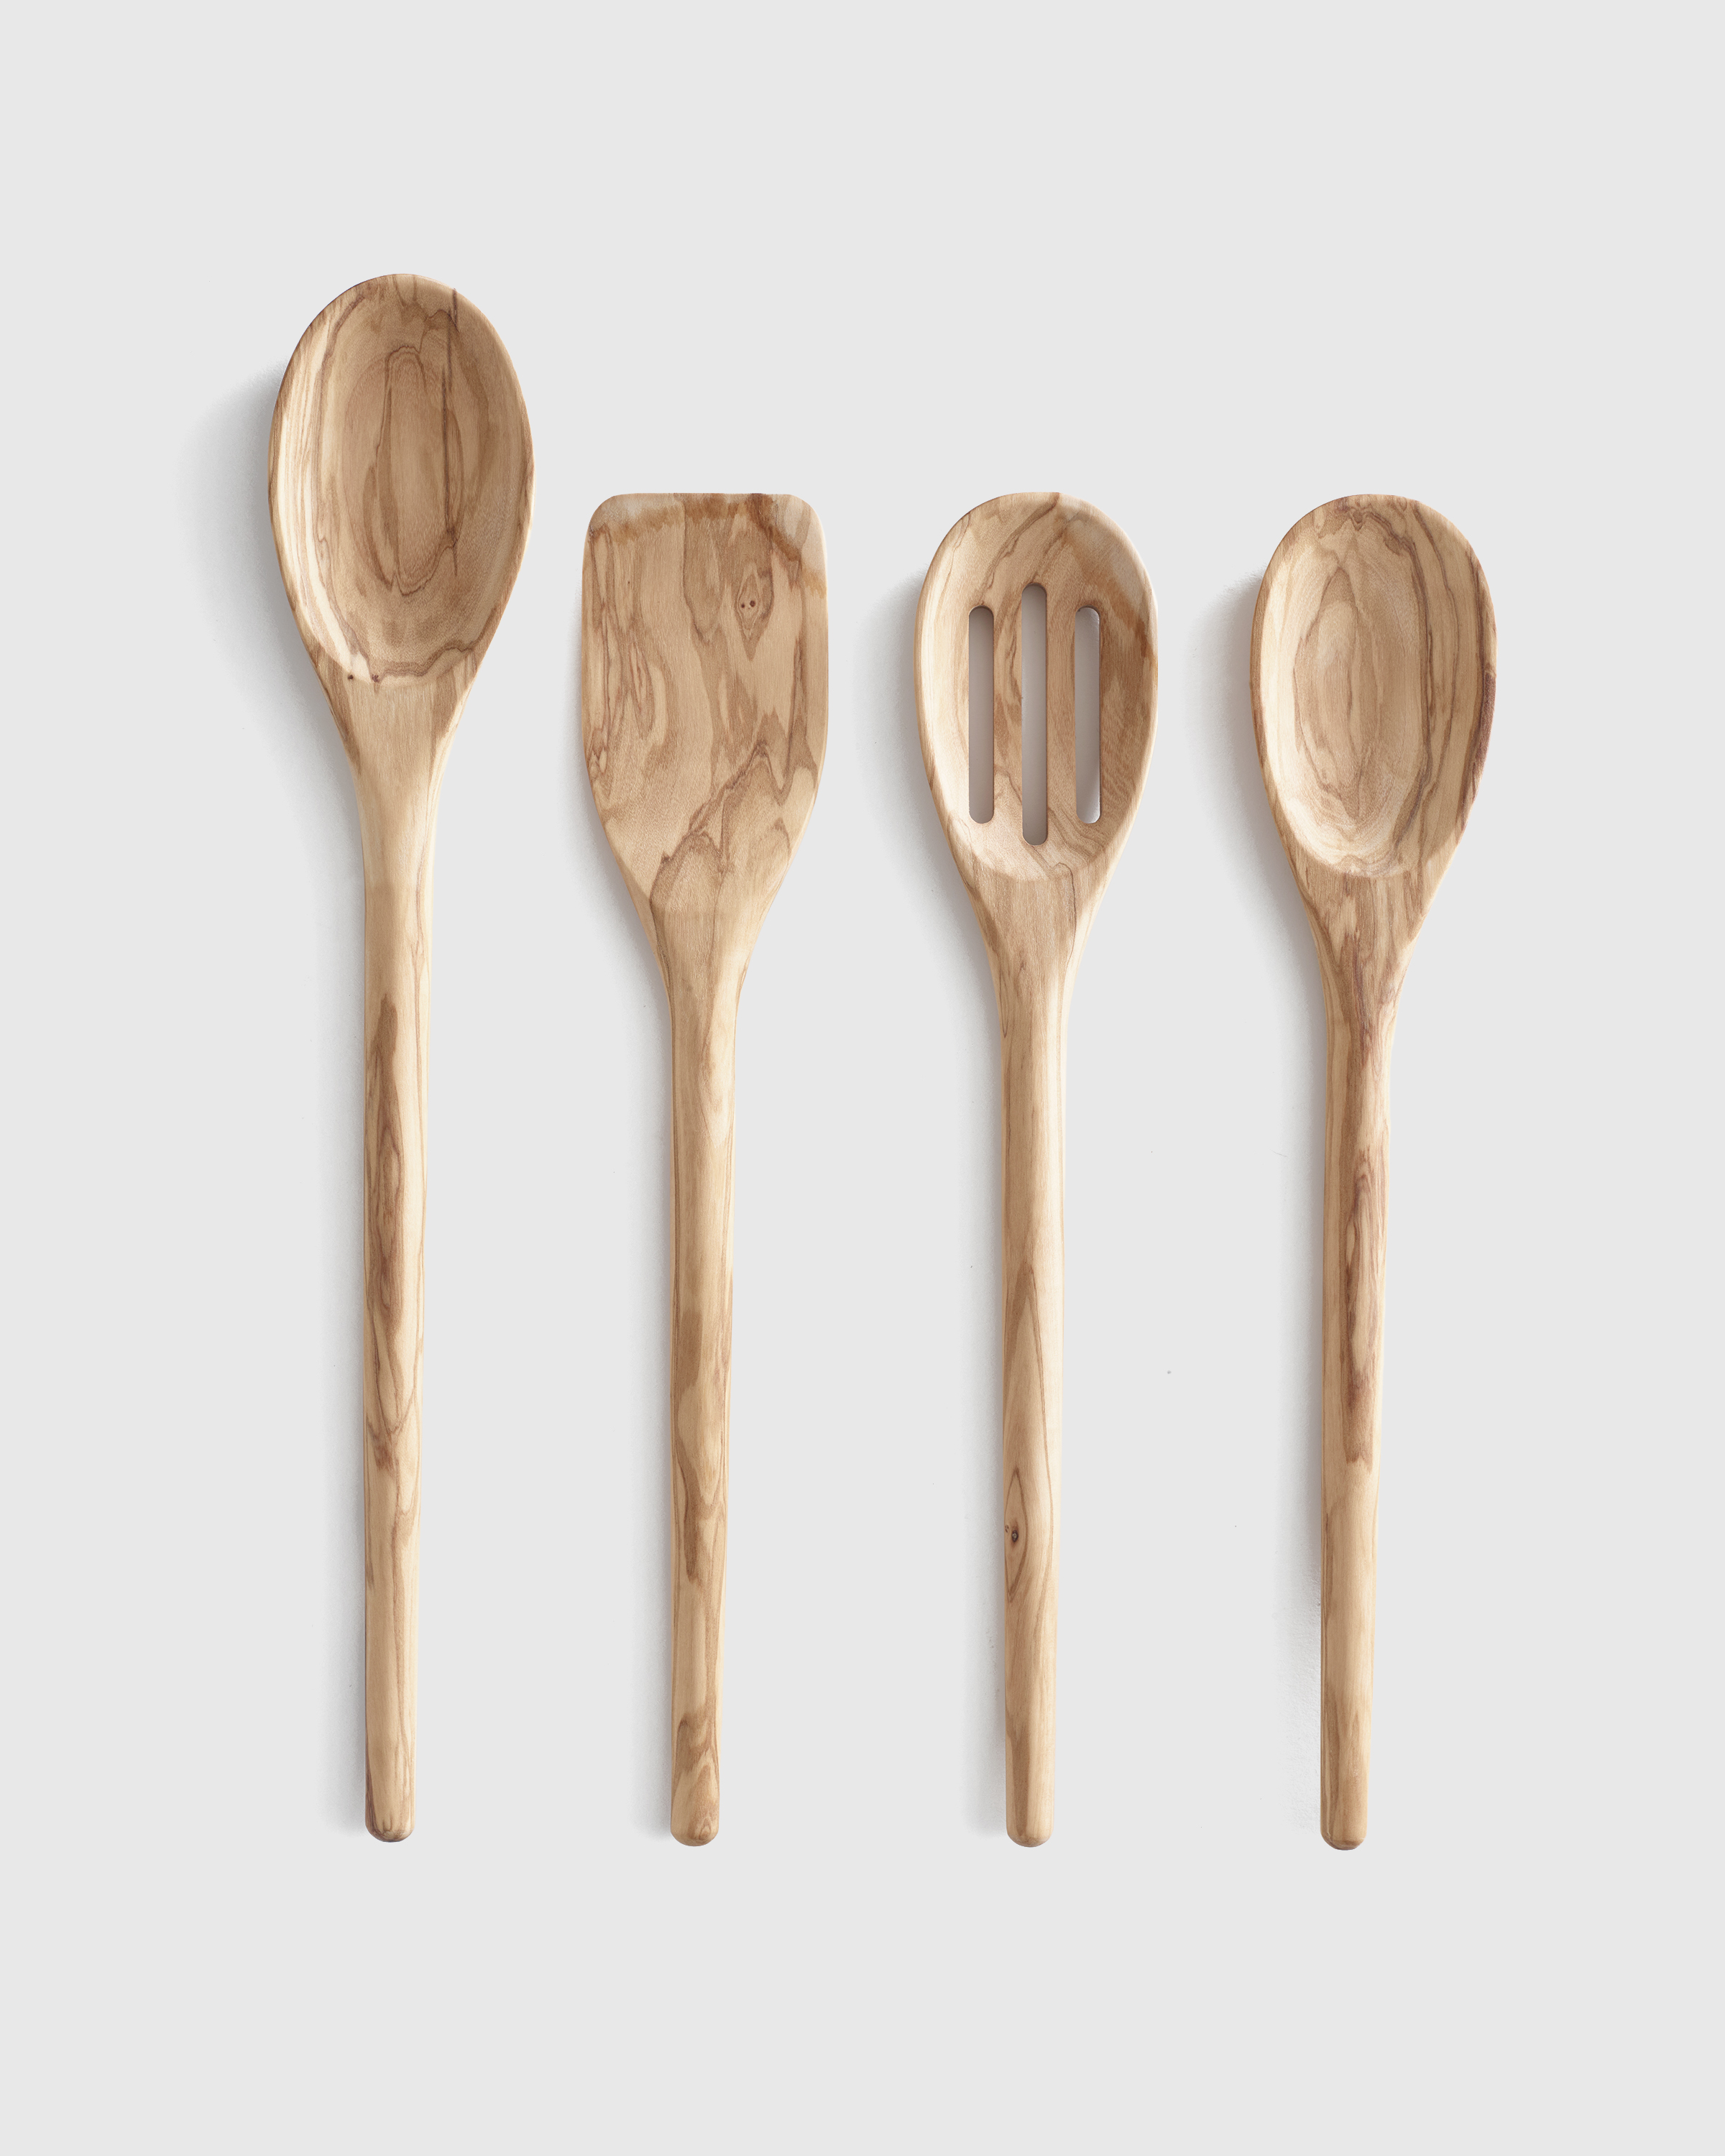 Olive Wood Utensil Set, Wooden Utensils for Cooking, Kitchen Utensils Set,  4-pcs